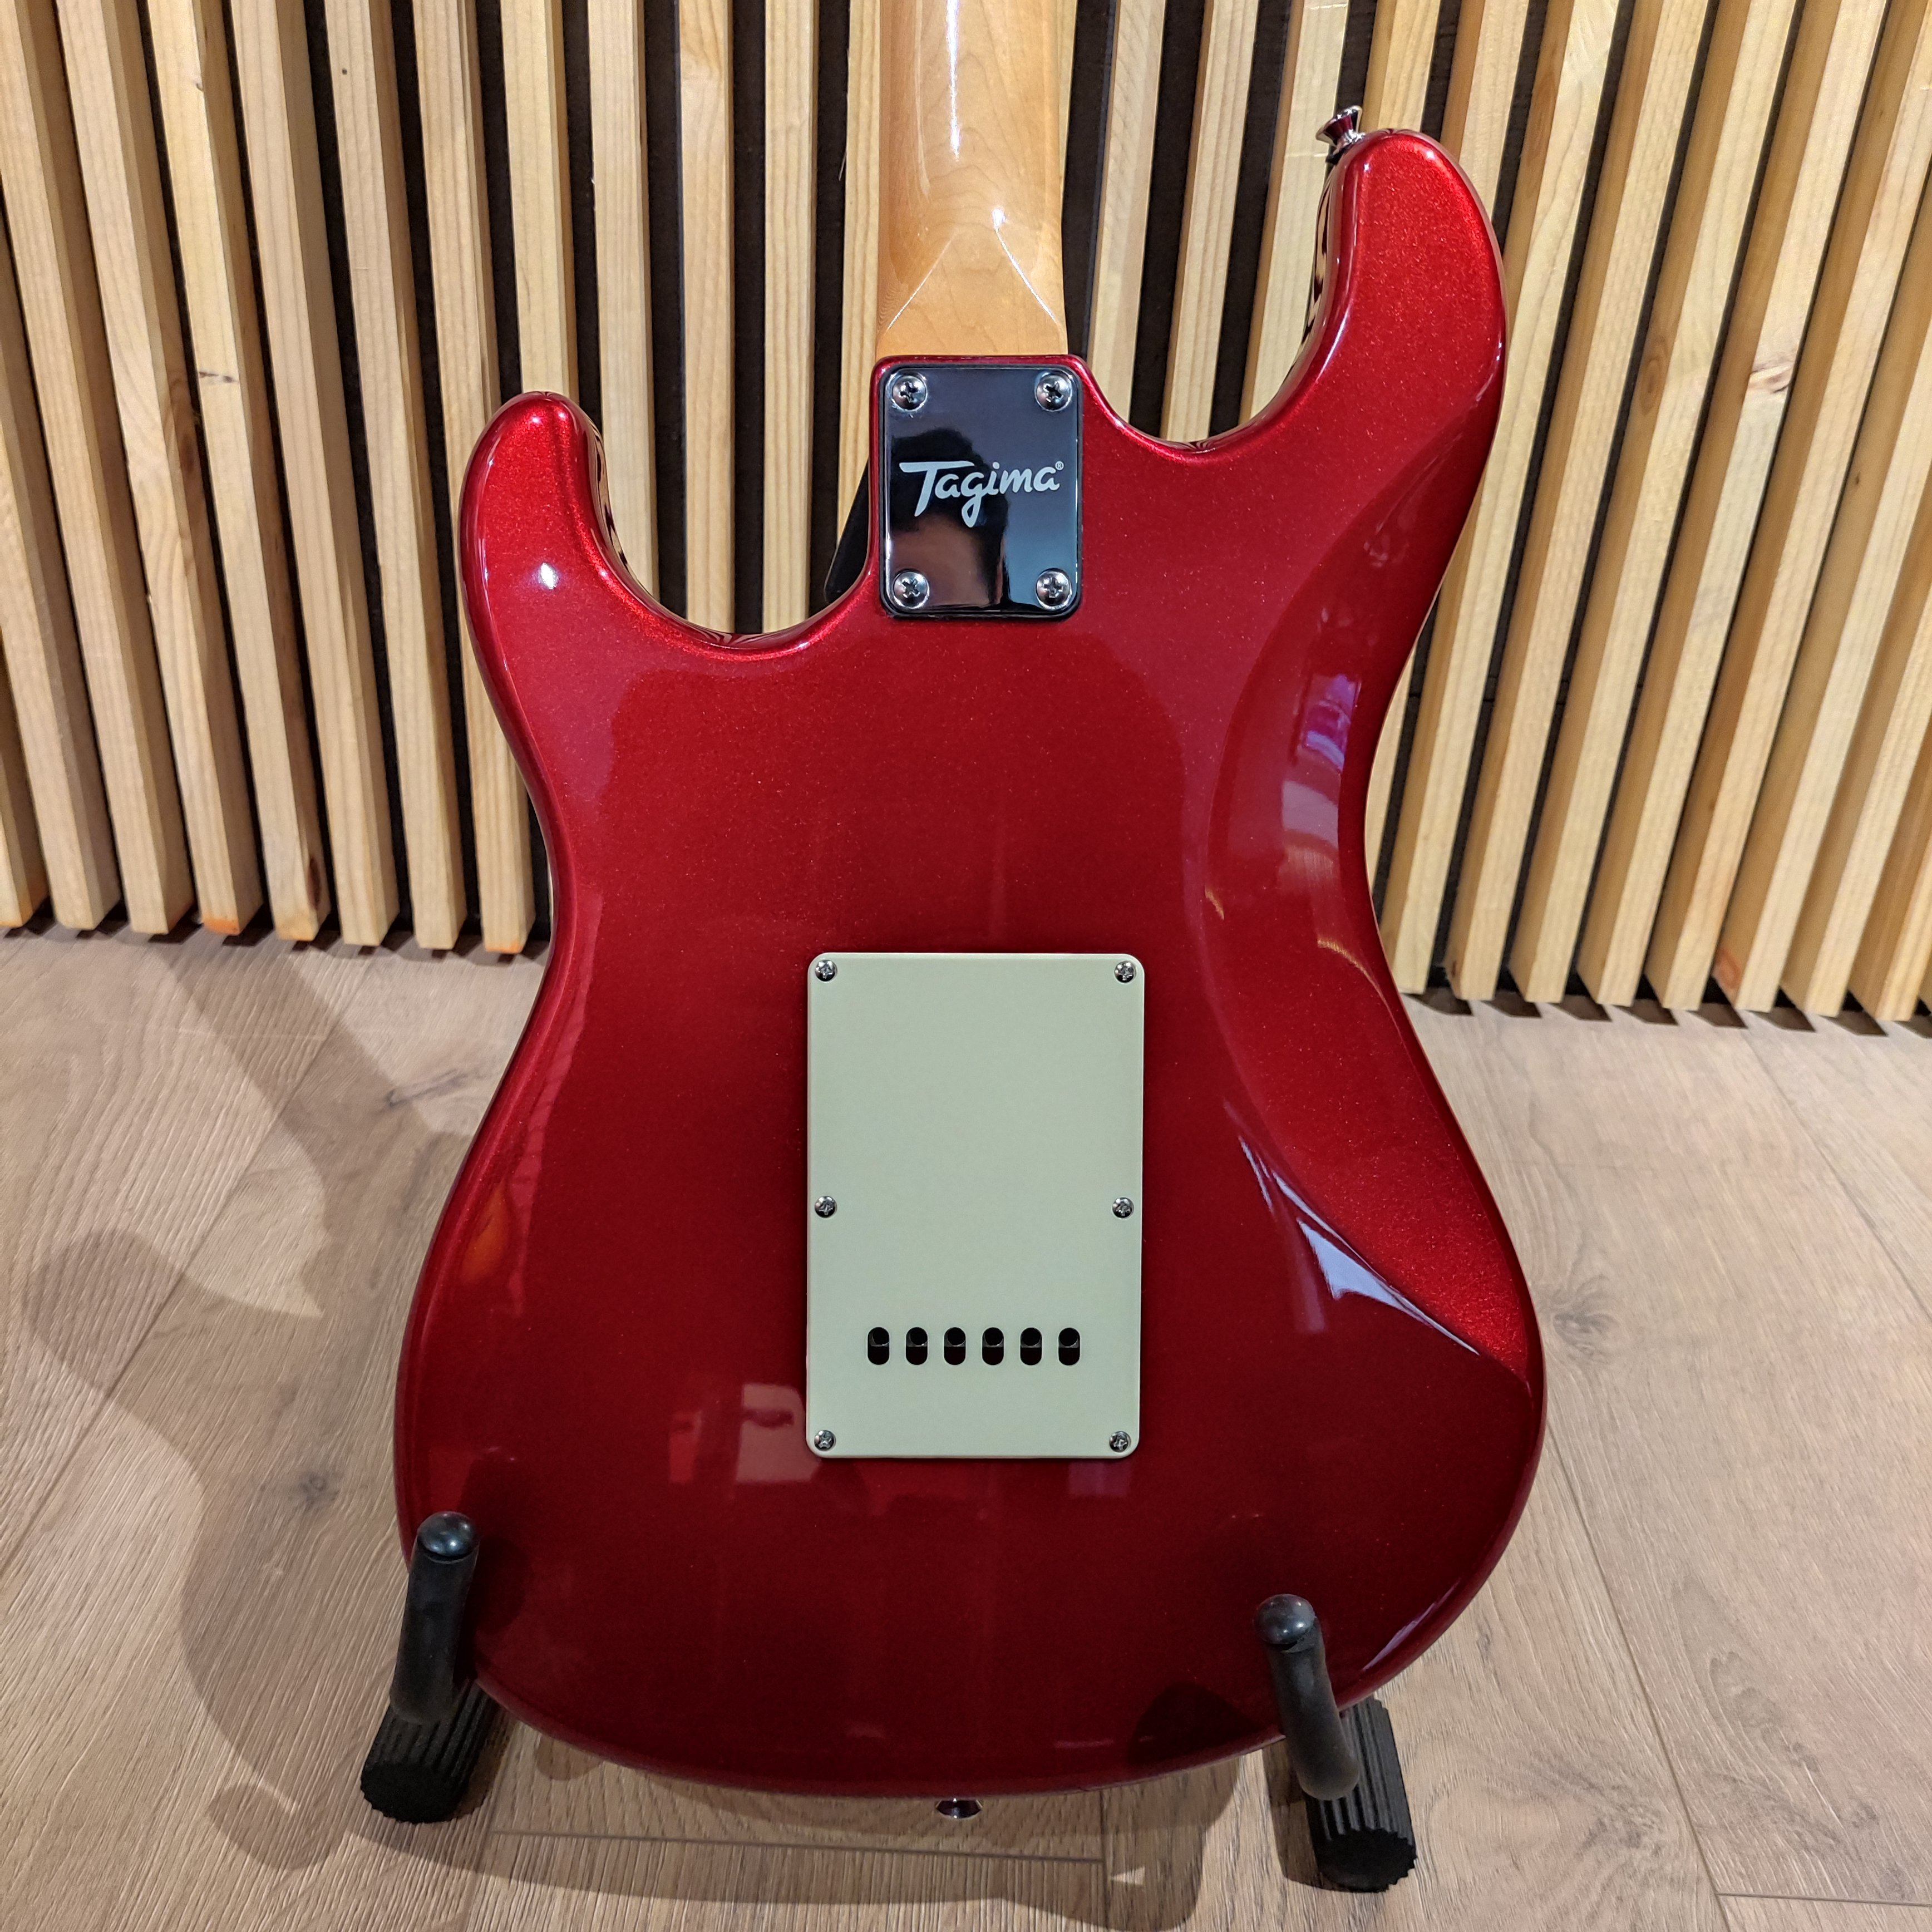 Tagima TG-540 Metallic Red L/MG Guitarra Eléctrica Guitarras Eléctricas Tagima 